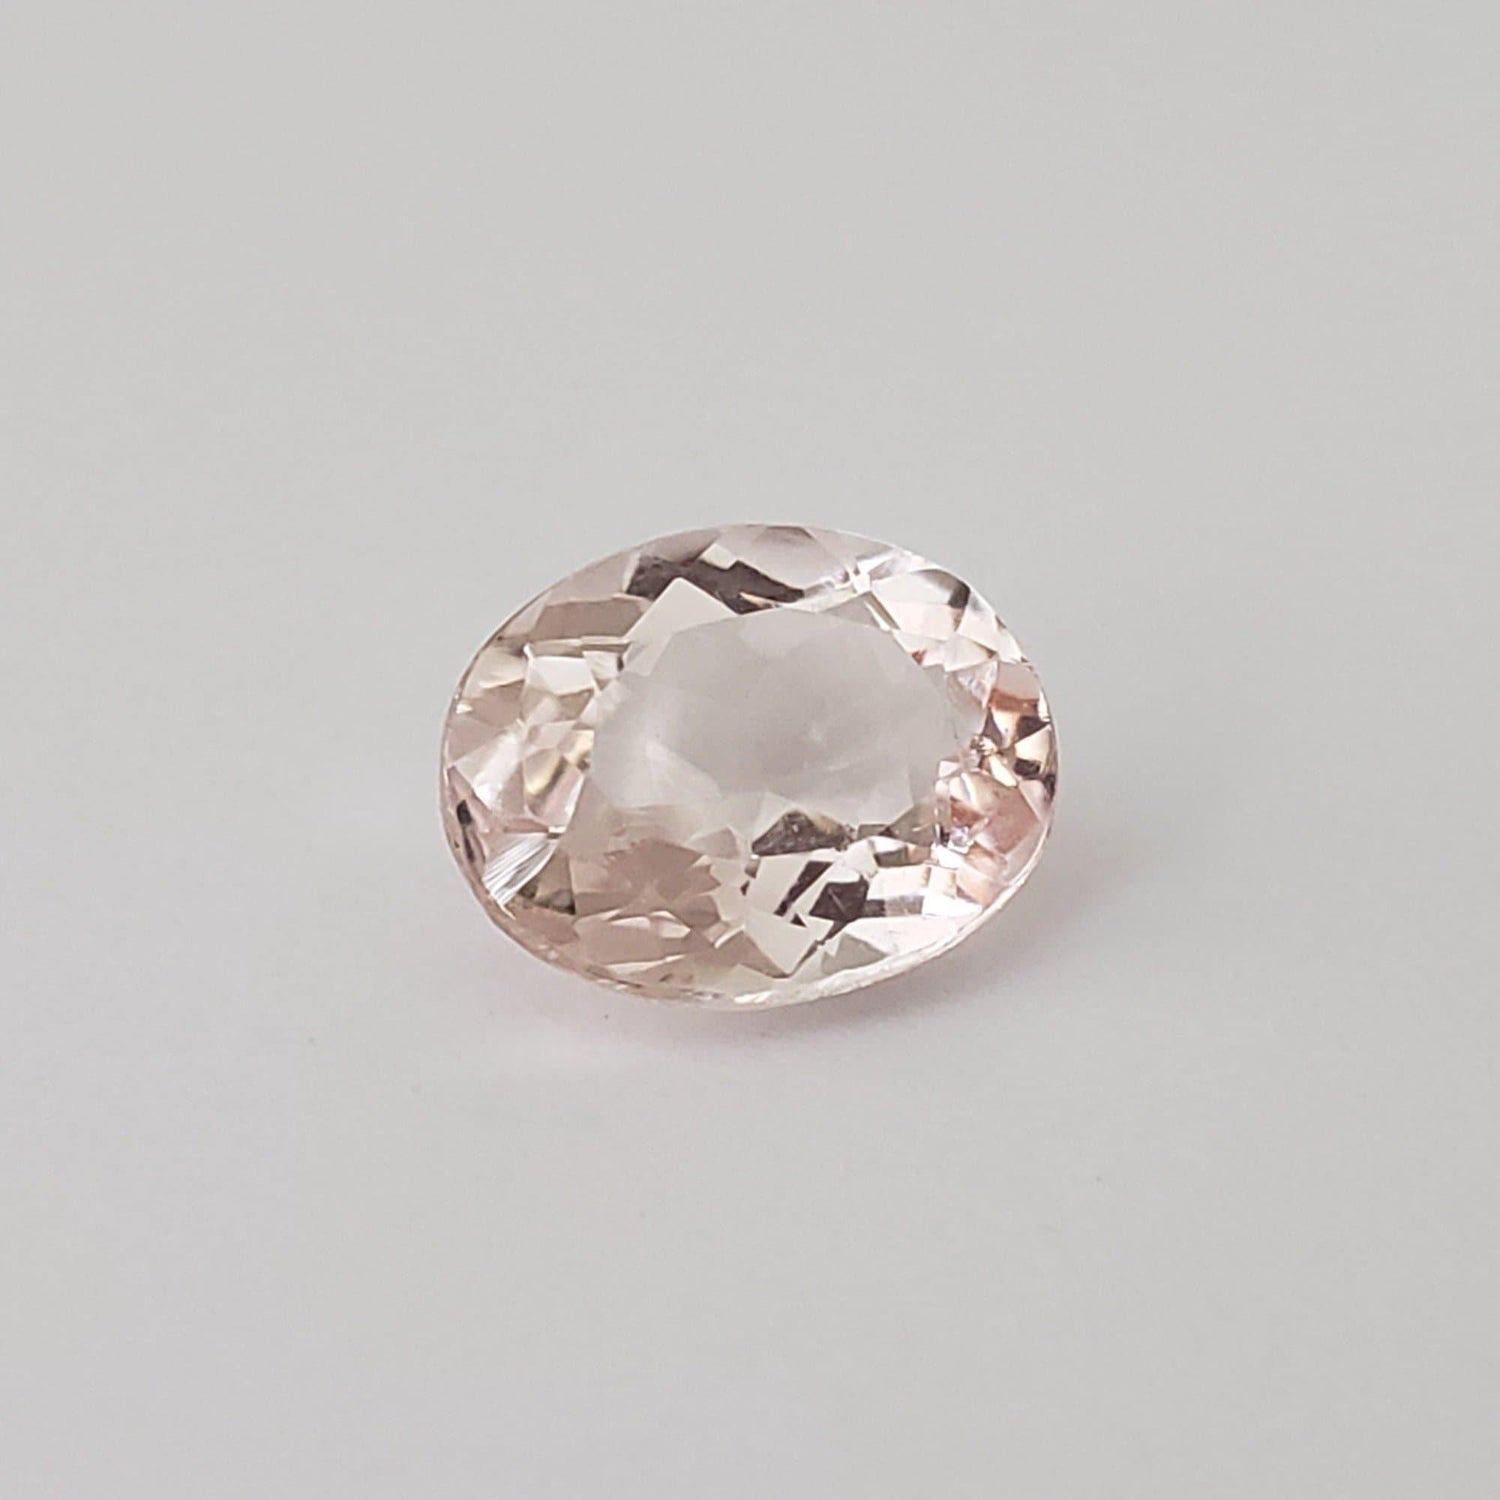 Morganite | Pink Beryl | Oval Cut | Light Pink | 9.8x7.6mm 2.09ct